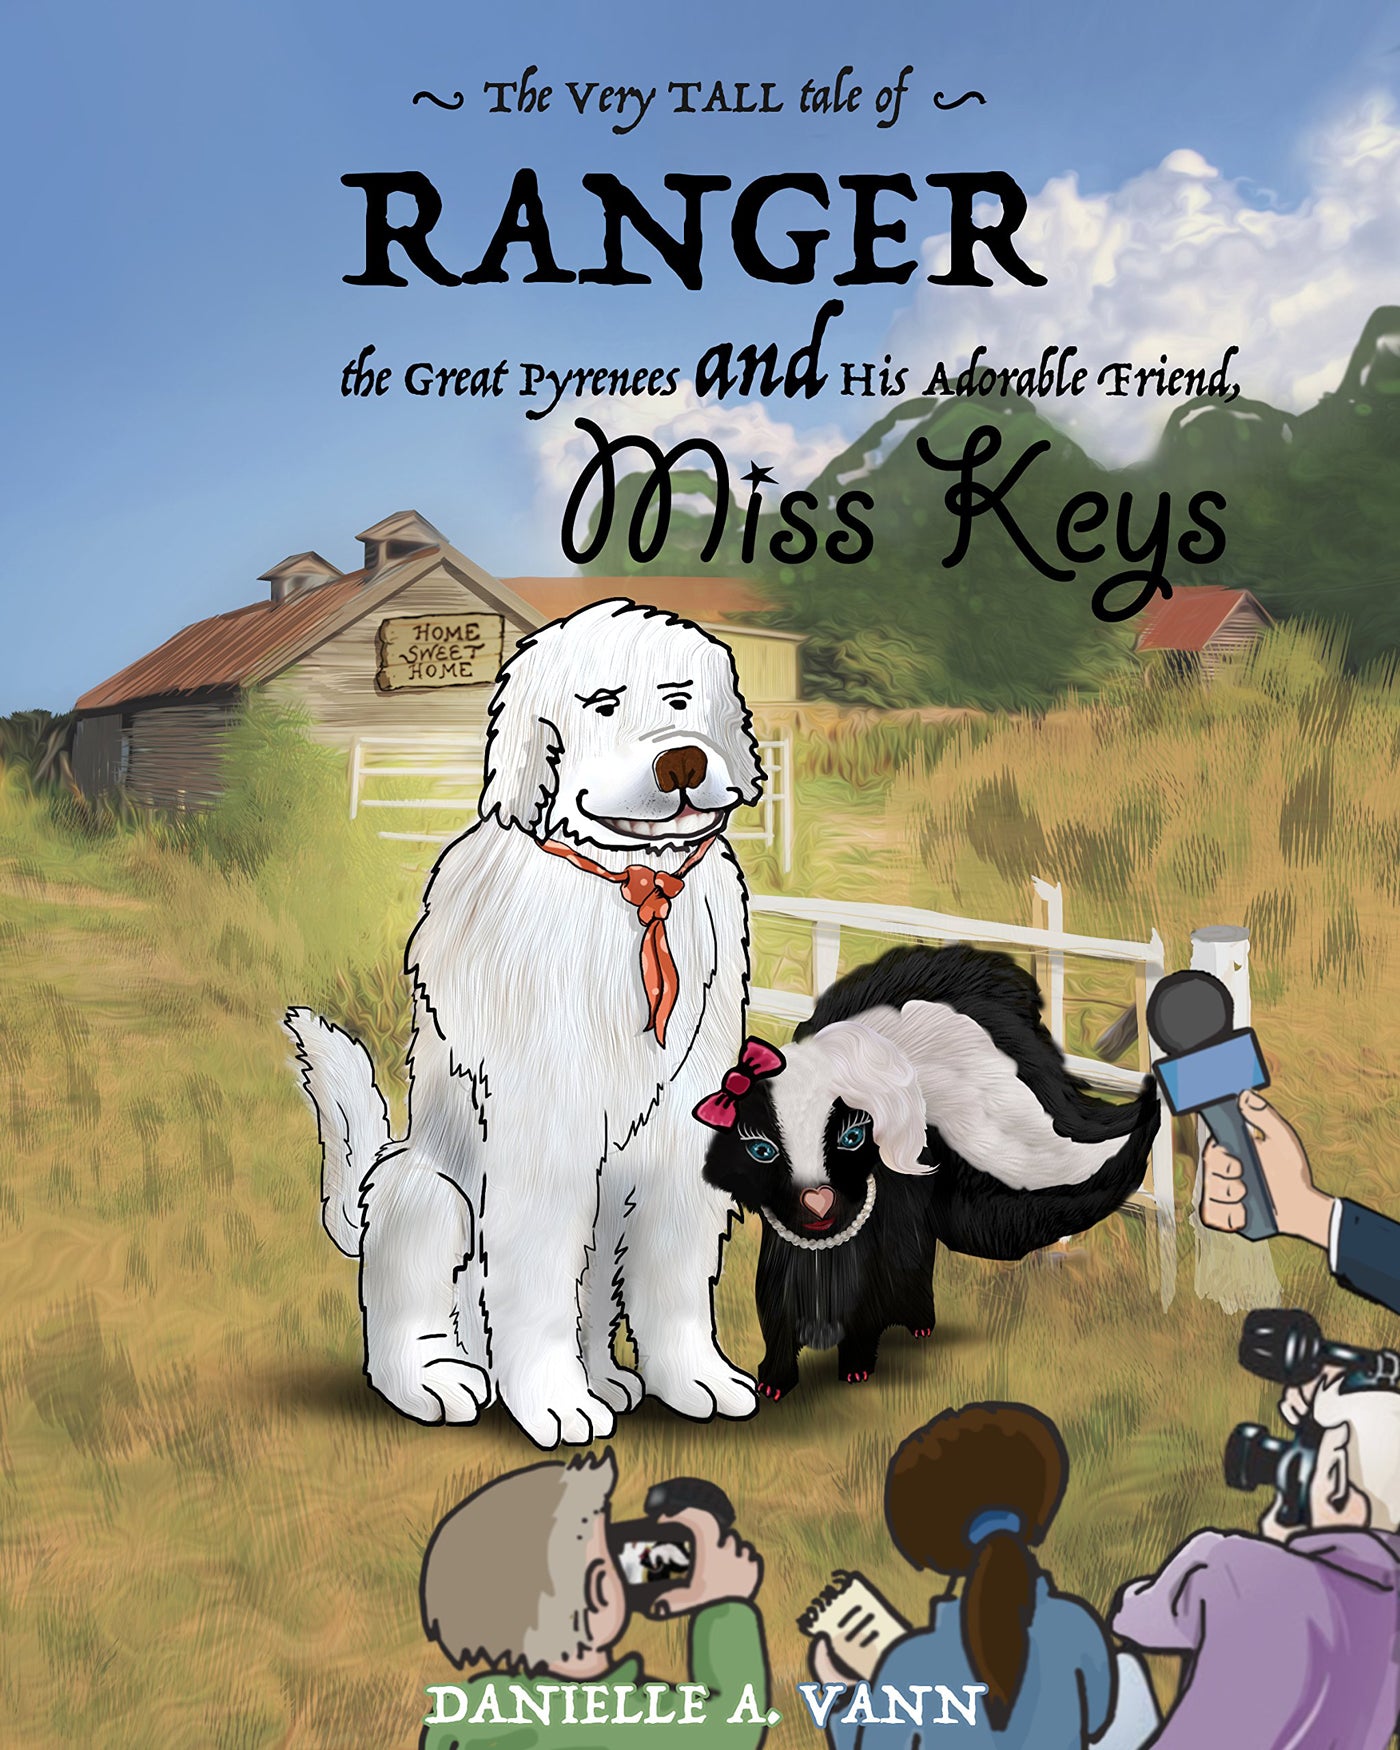 Great Pyrenees children's book - Ranger and Keys